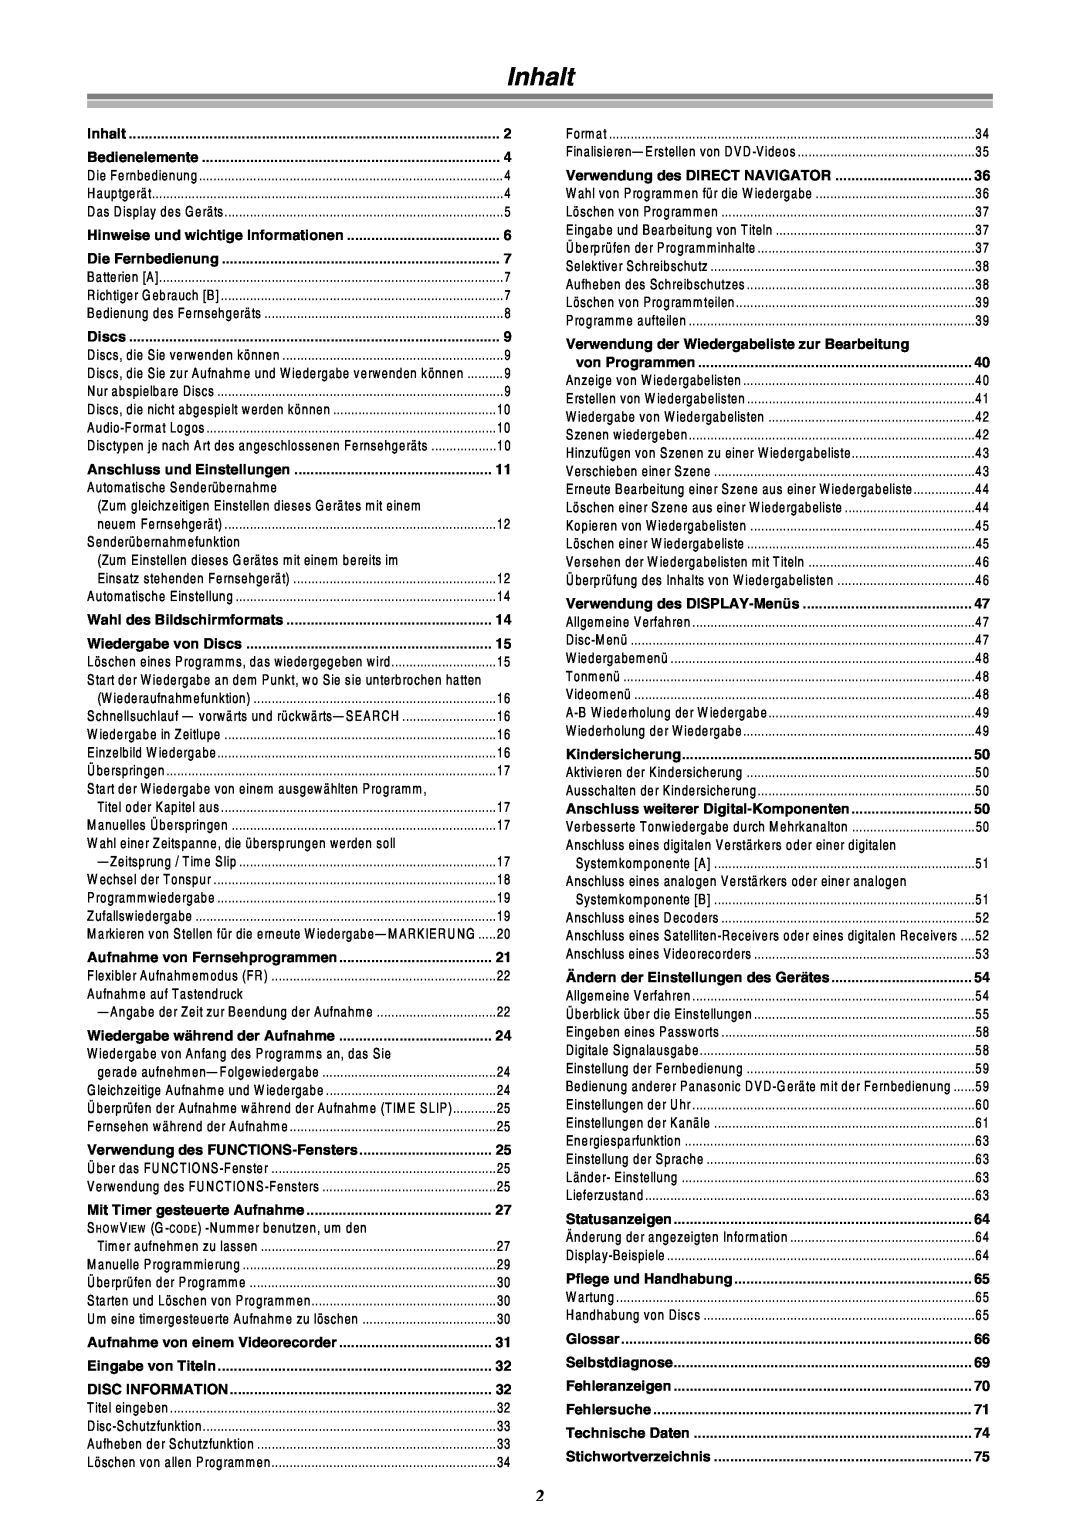 Panasonic DMR-E30 manual Inhalt, Disc Information, Verwendung der Wiedergabeliste zur Bearbeitung 